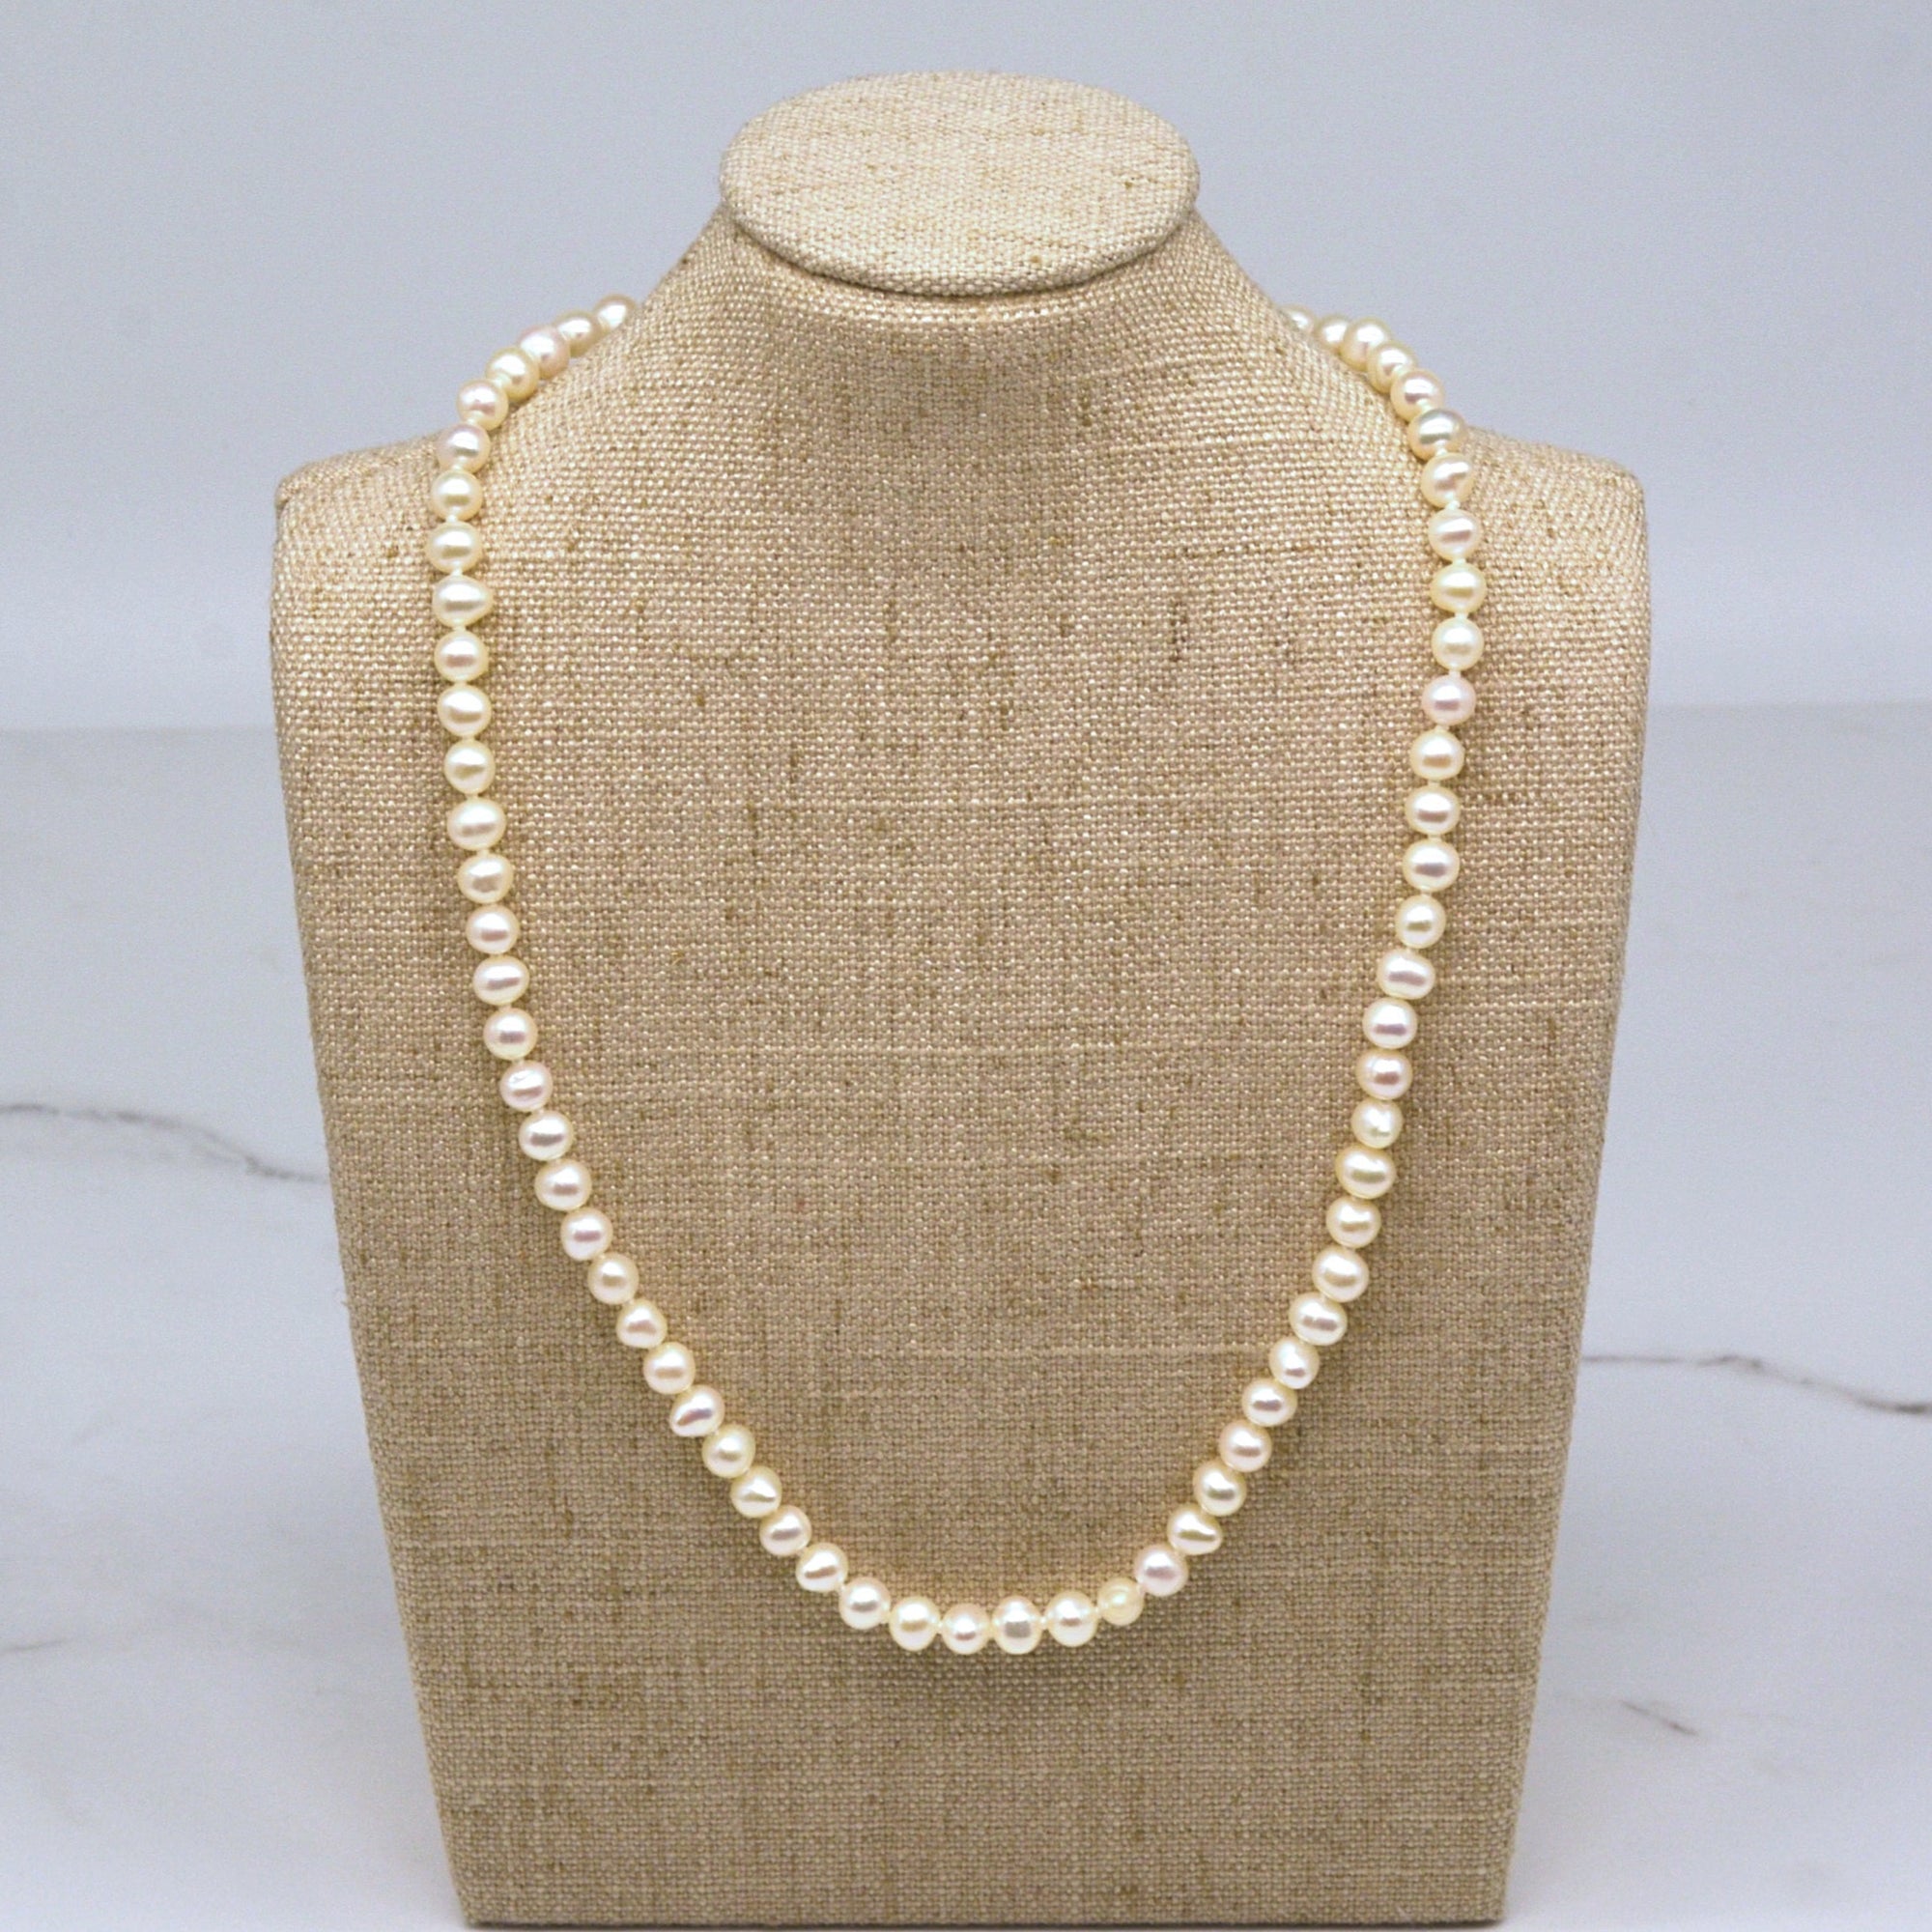 'Bespoke' Panache Pearl Necklace | 18